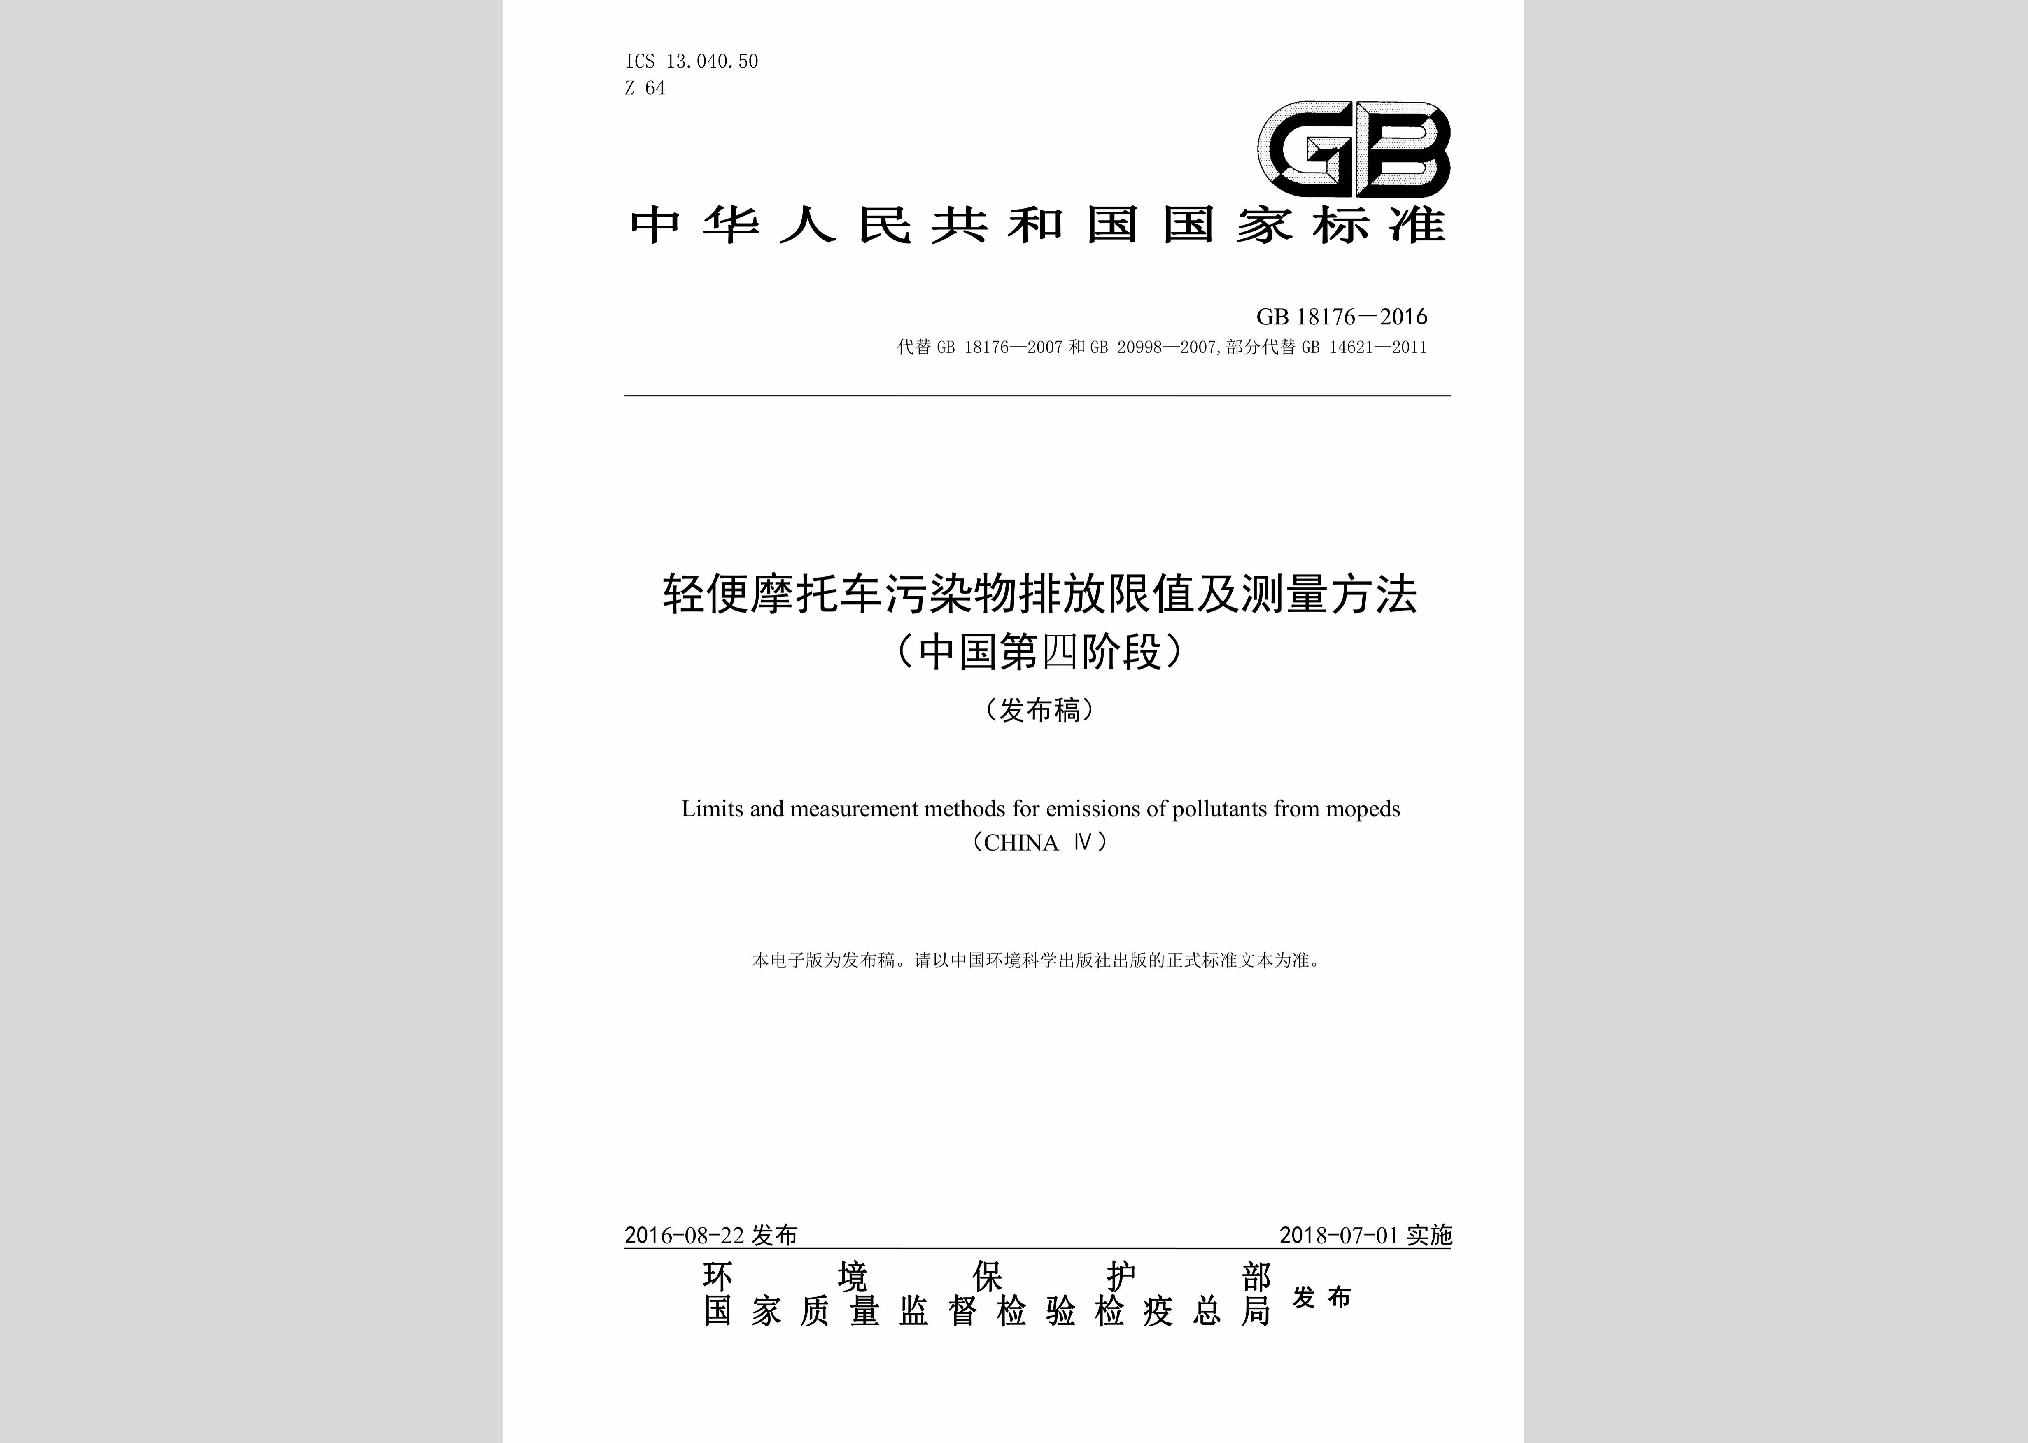 GB18176-2016：轻便摩托车污染物排放限值及测量方法（中国第四阶段）